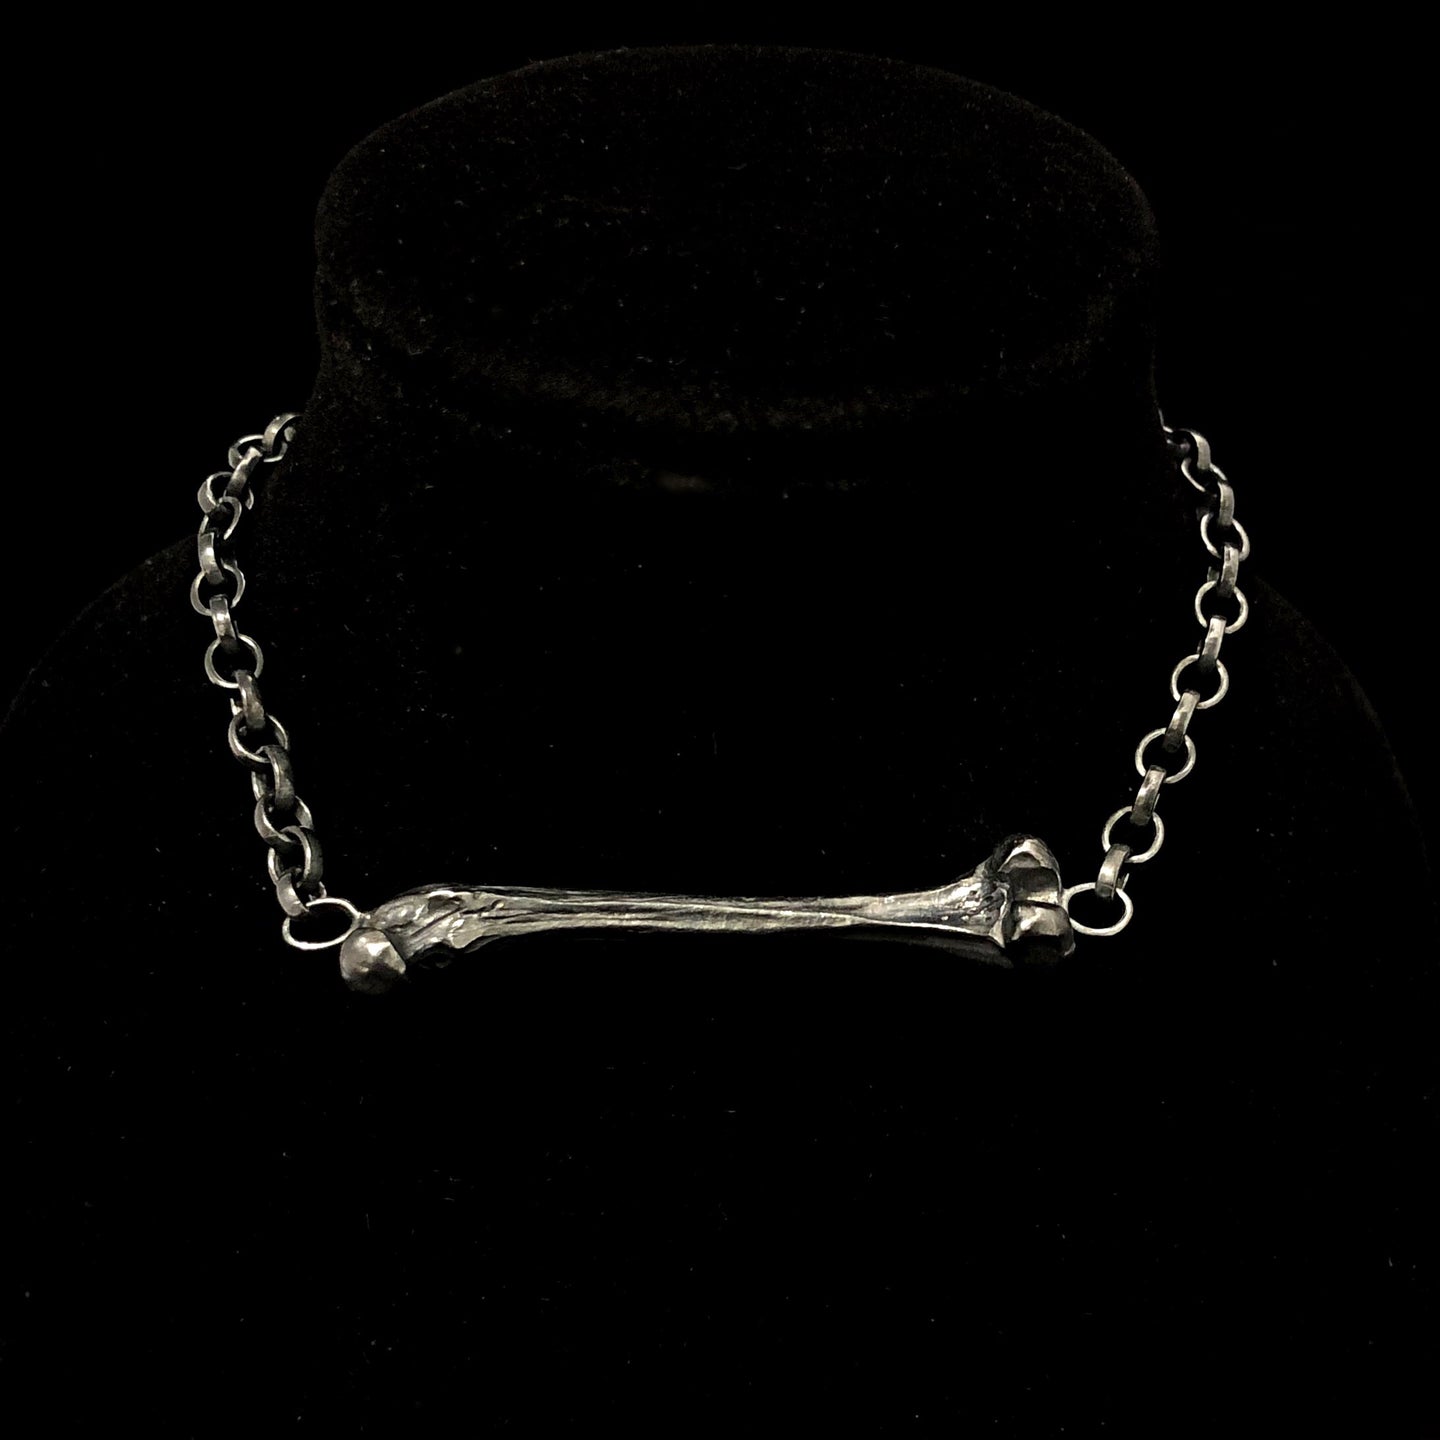 925 Femur Necklace